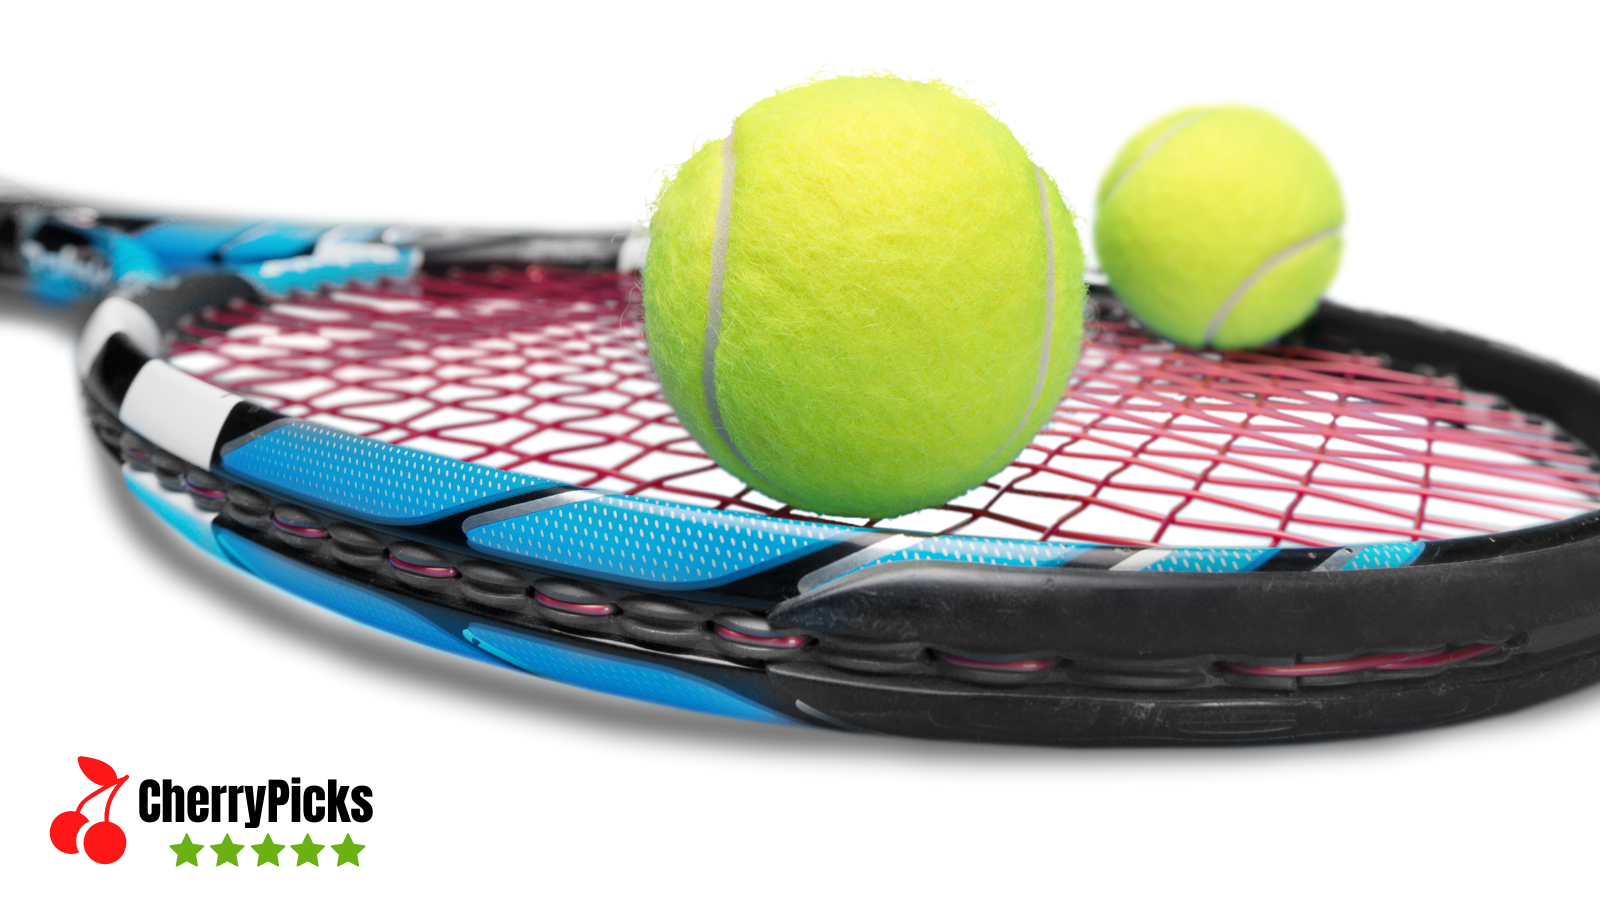 2pcs Premium Silicone Tennis Ball Racquet Vibration Dampeners Shock Absorber 